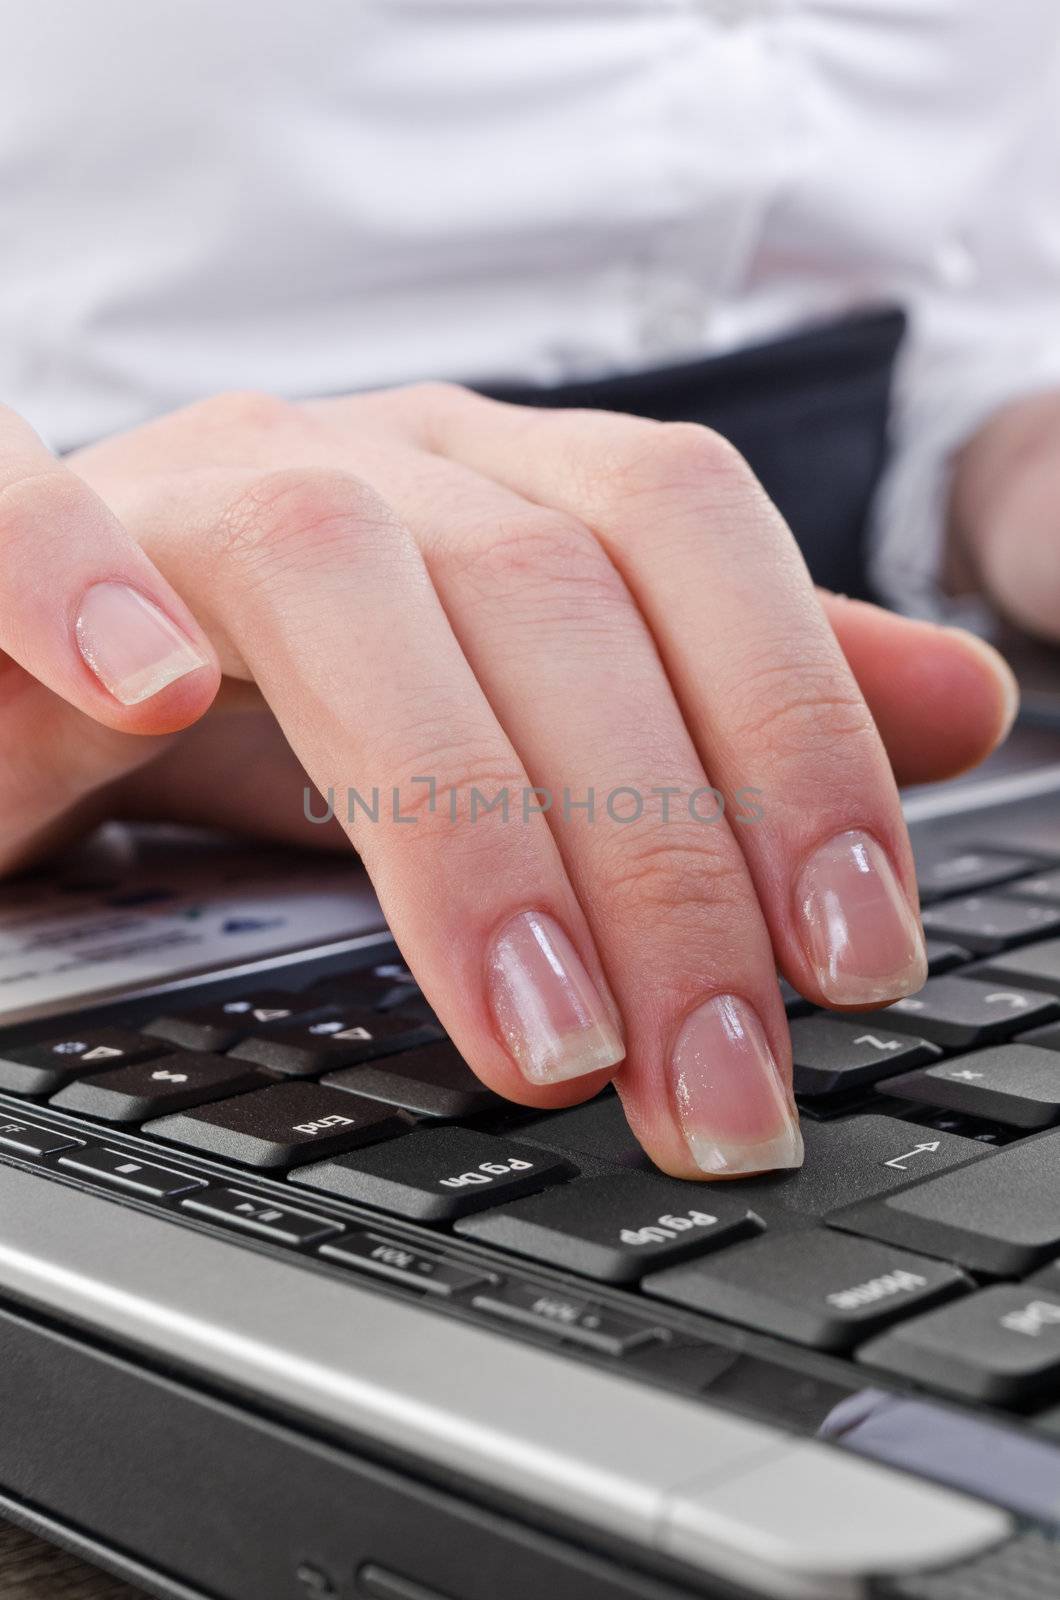 woman pressing enter key on the laptop computer keyboard, selective focus on key-press